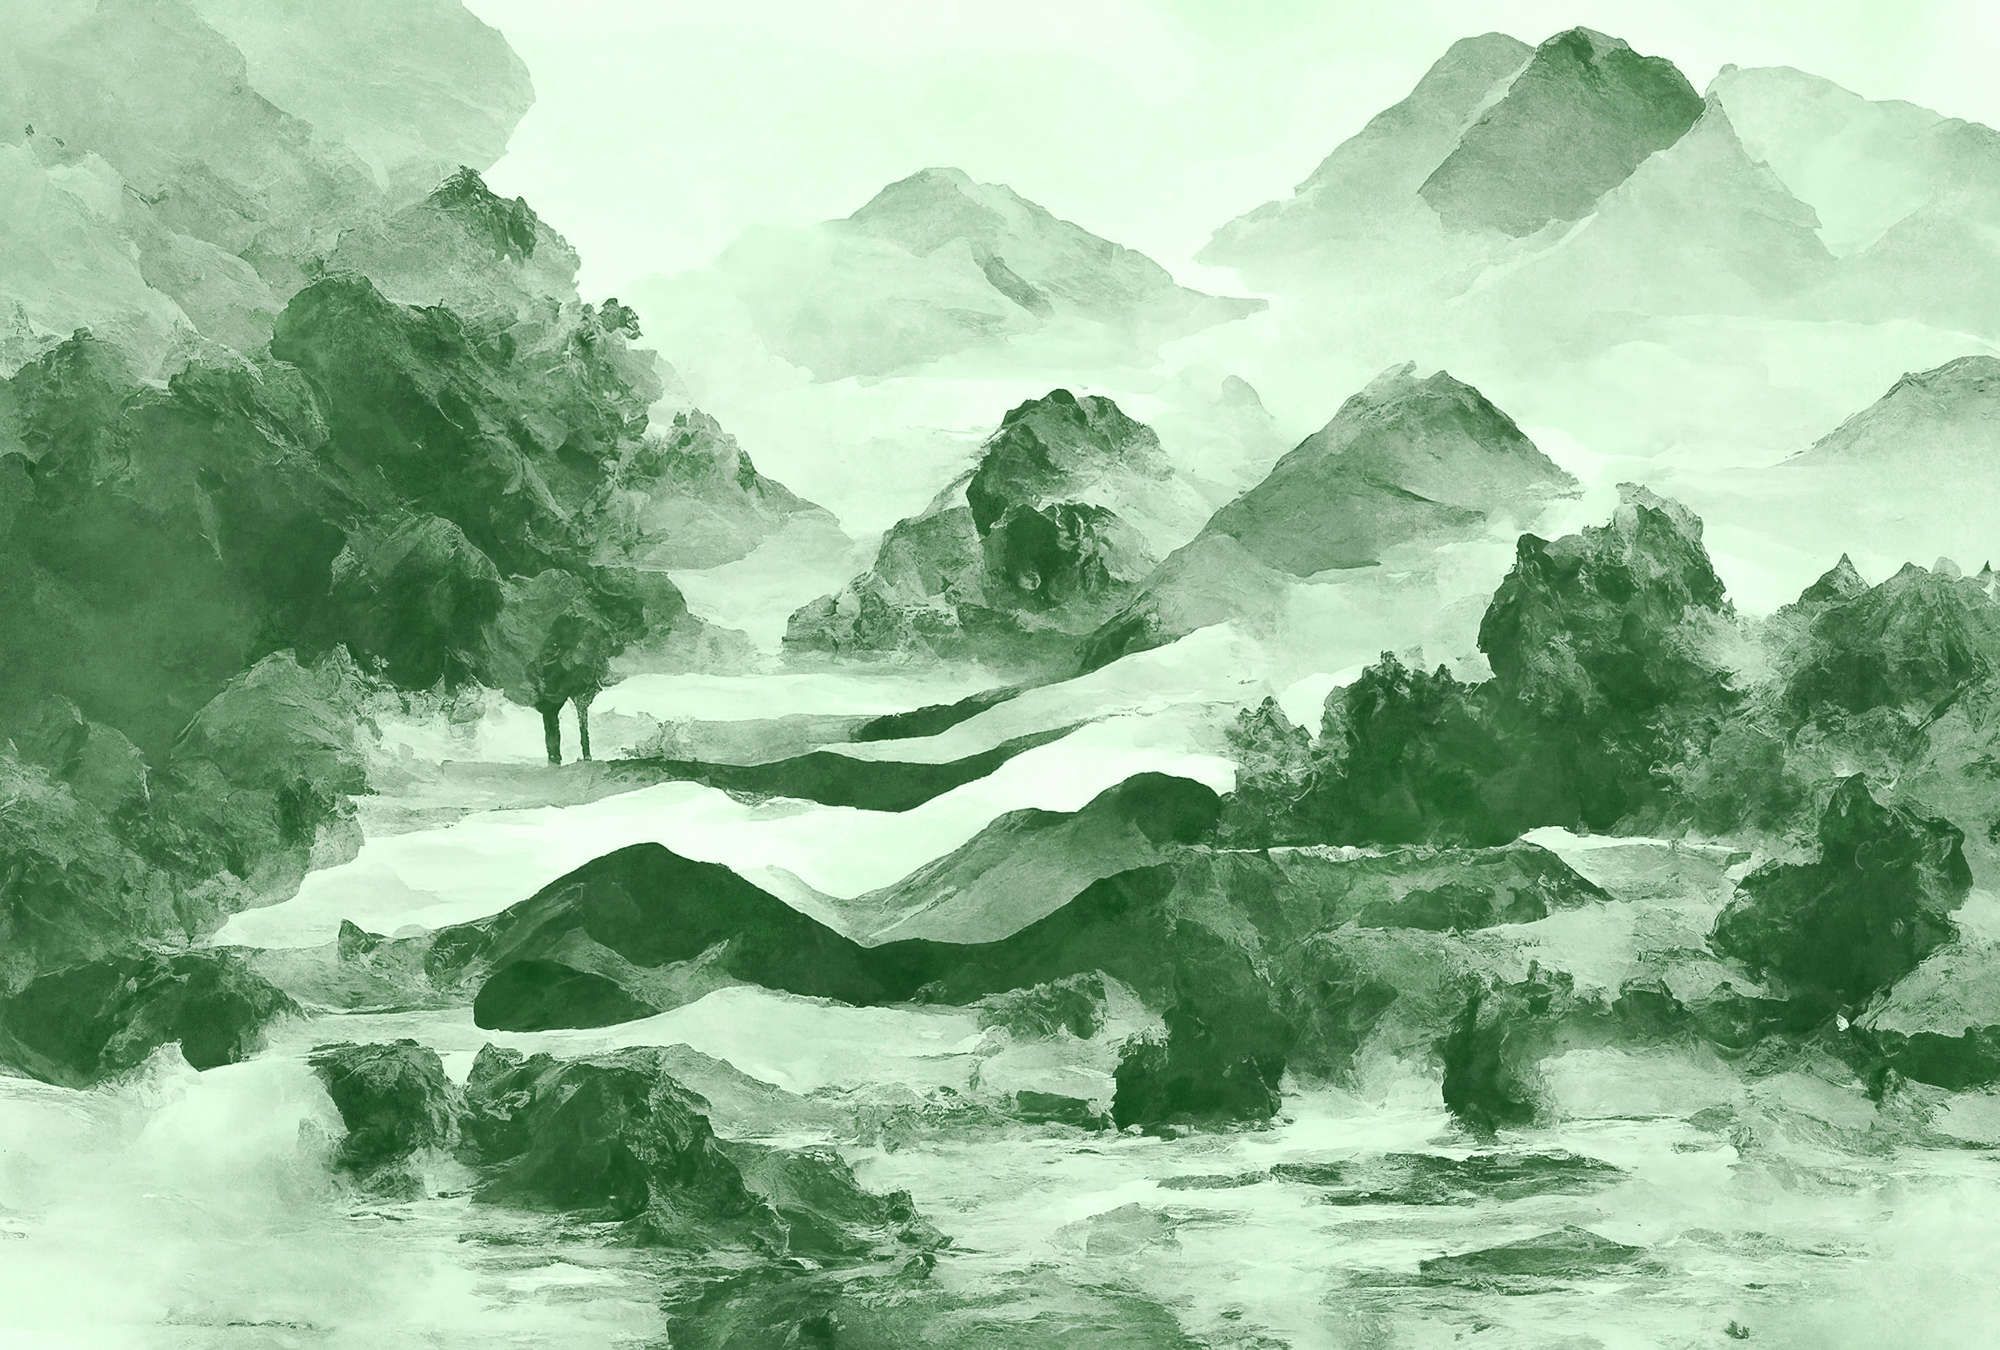             Photo wallpaper »tinterra 2« - Landscape with mountains & fog - Green | Smooth, slightly shiny premium non-woven fabric
        